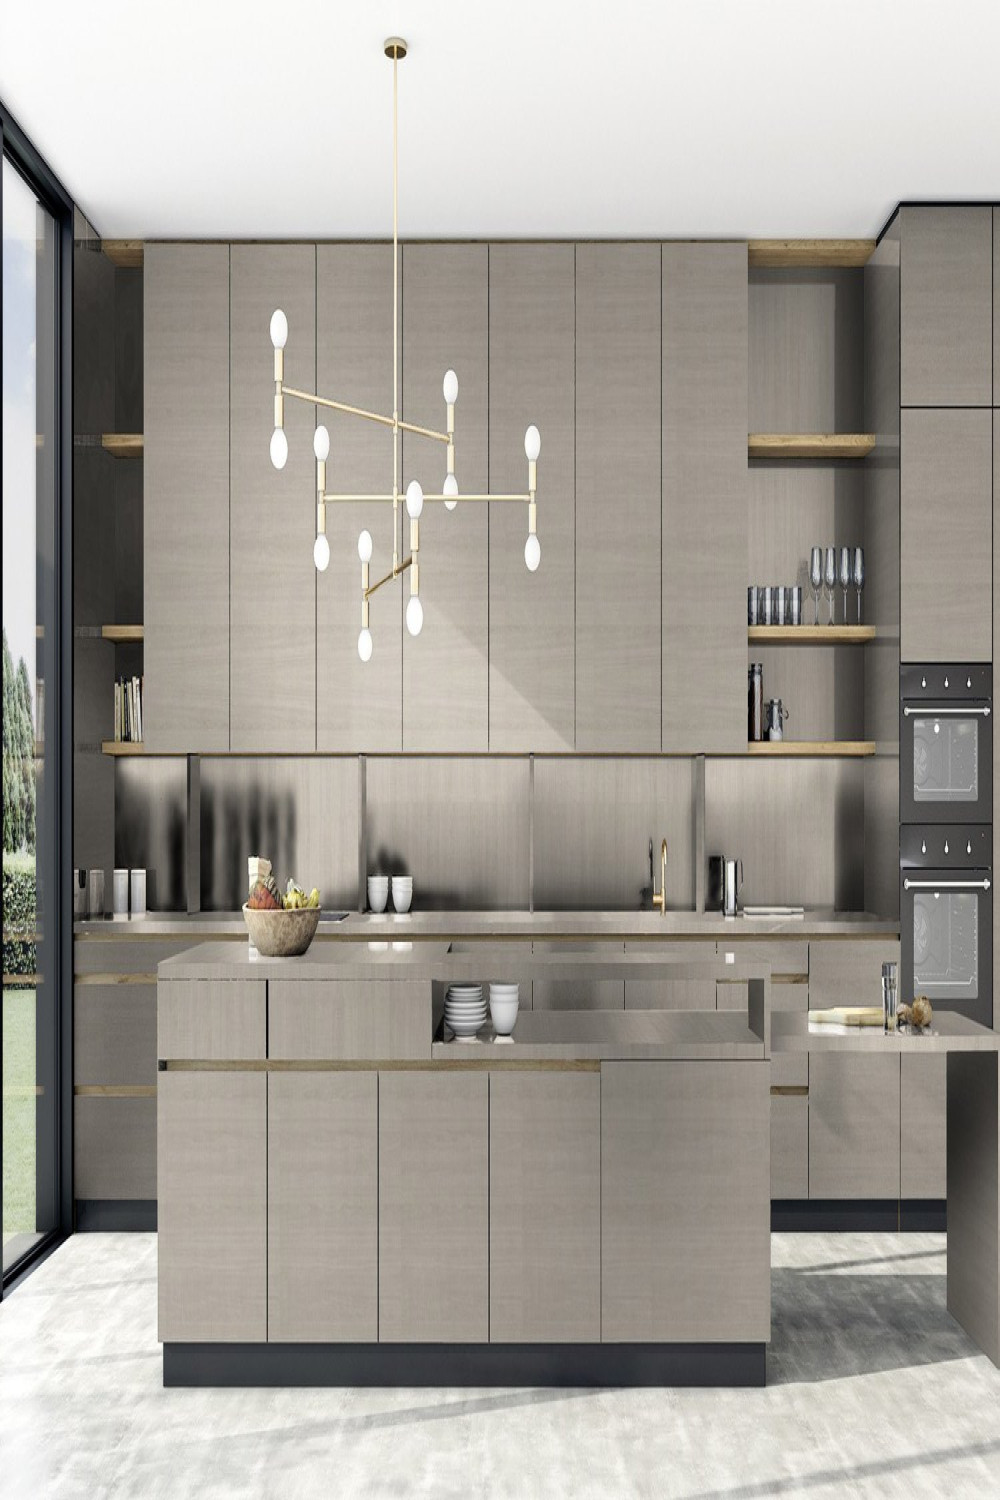 Cream Kitchen Cabinet Design Ideas To Inspire You